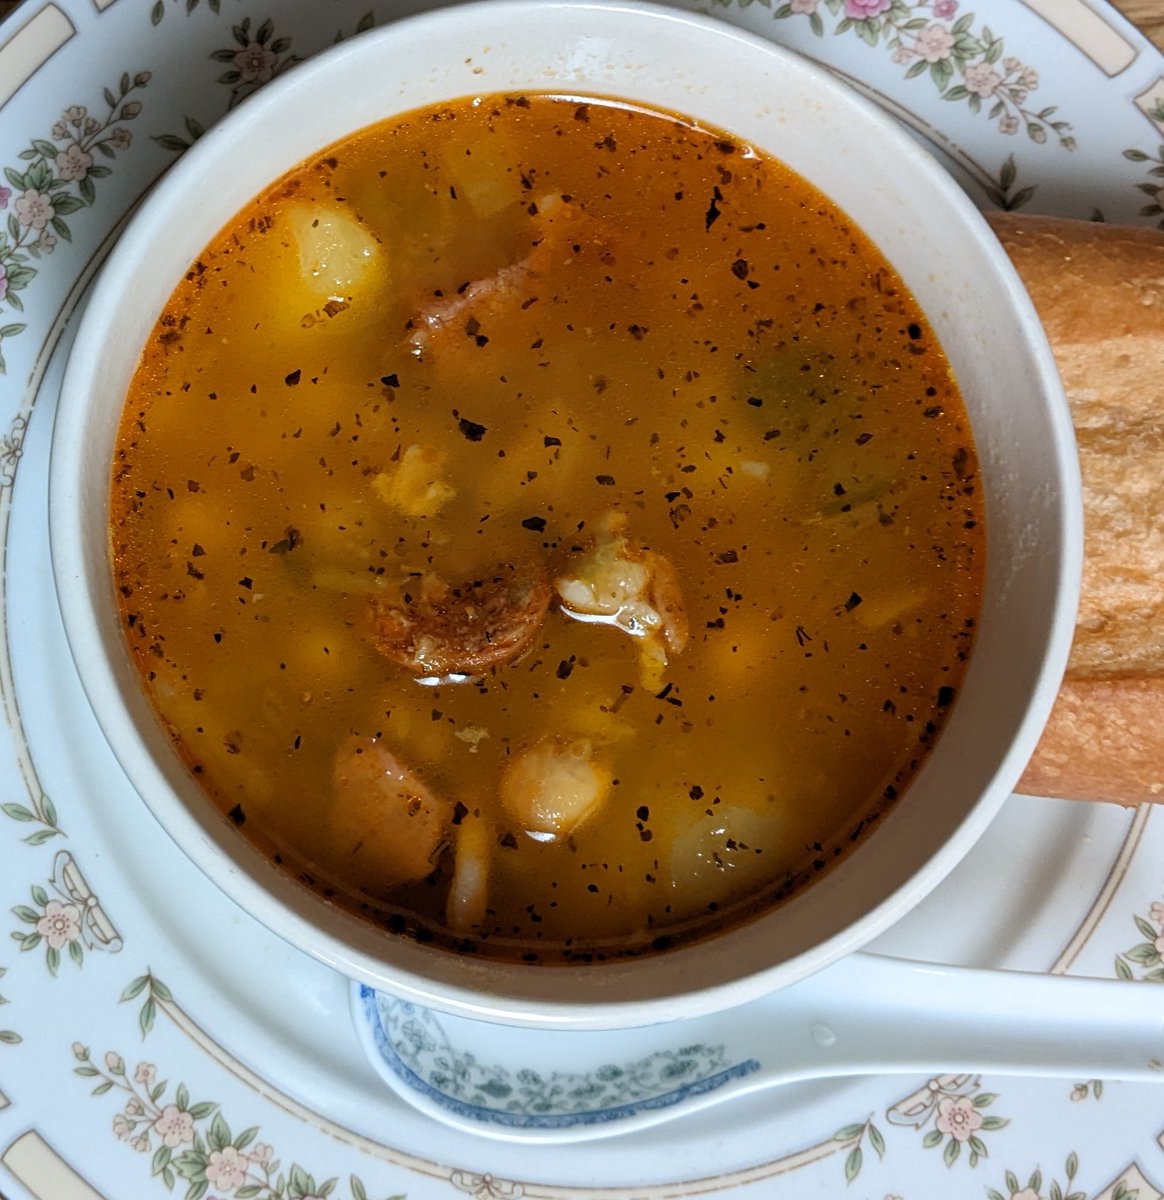 Garbanzo Bean Soup & Cuban Bread

#allkindsofrecipes #testkitchen #garbanzobeansoup #spanishbeansoup #garbanzos #ham #chorizo #onion #greenpepper #potatoes #cubanbread #soup #soupseason